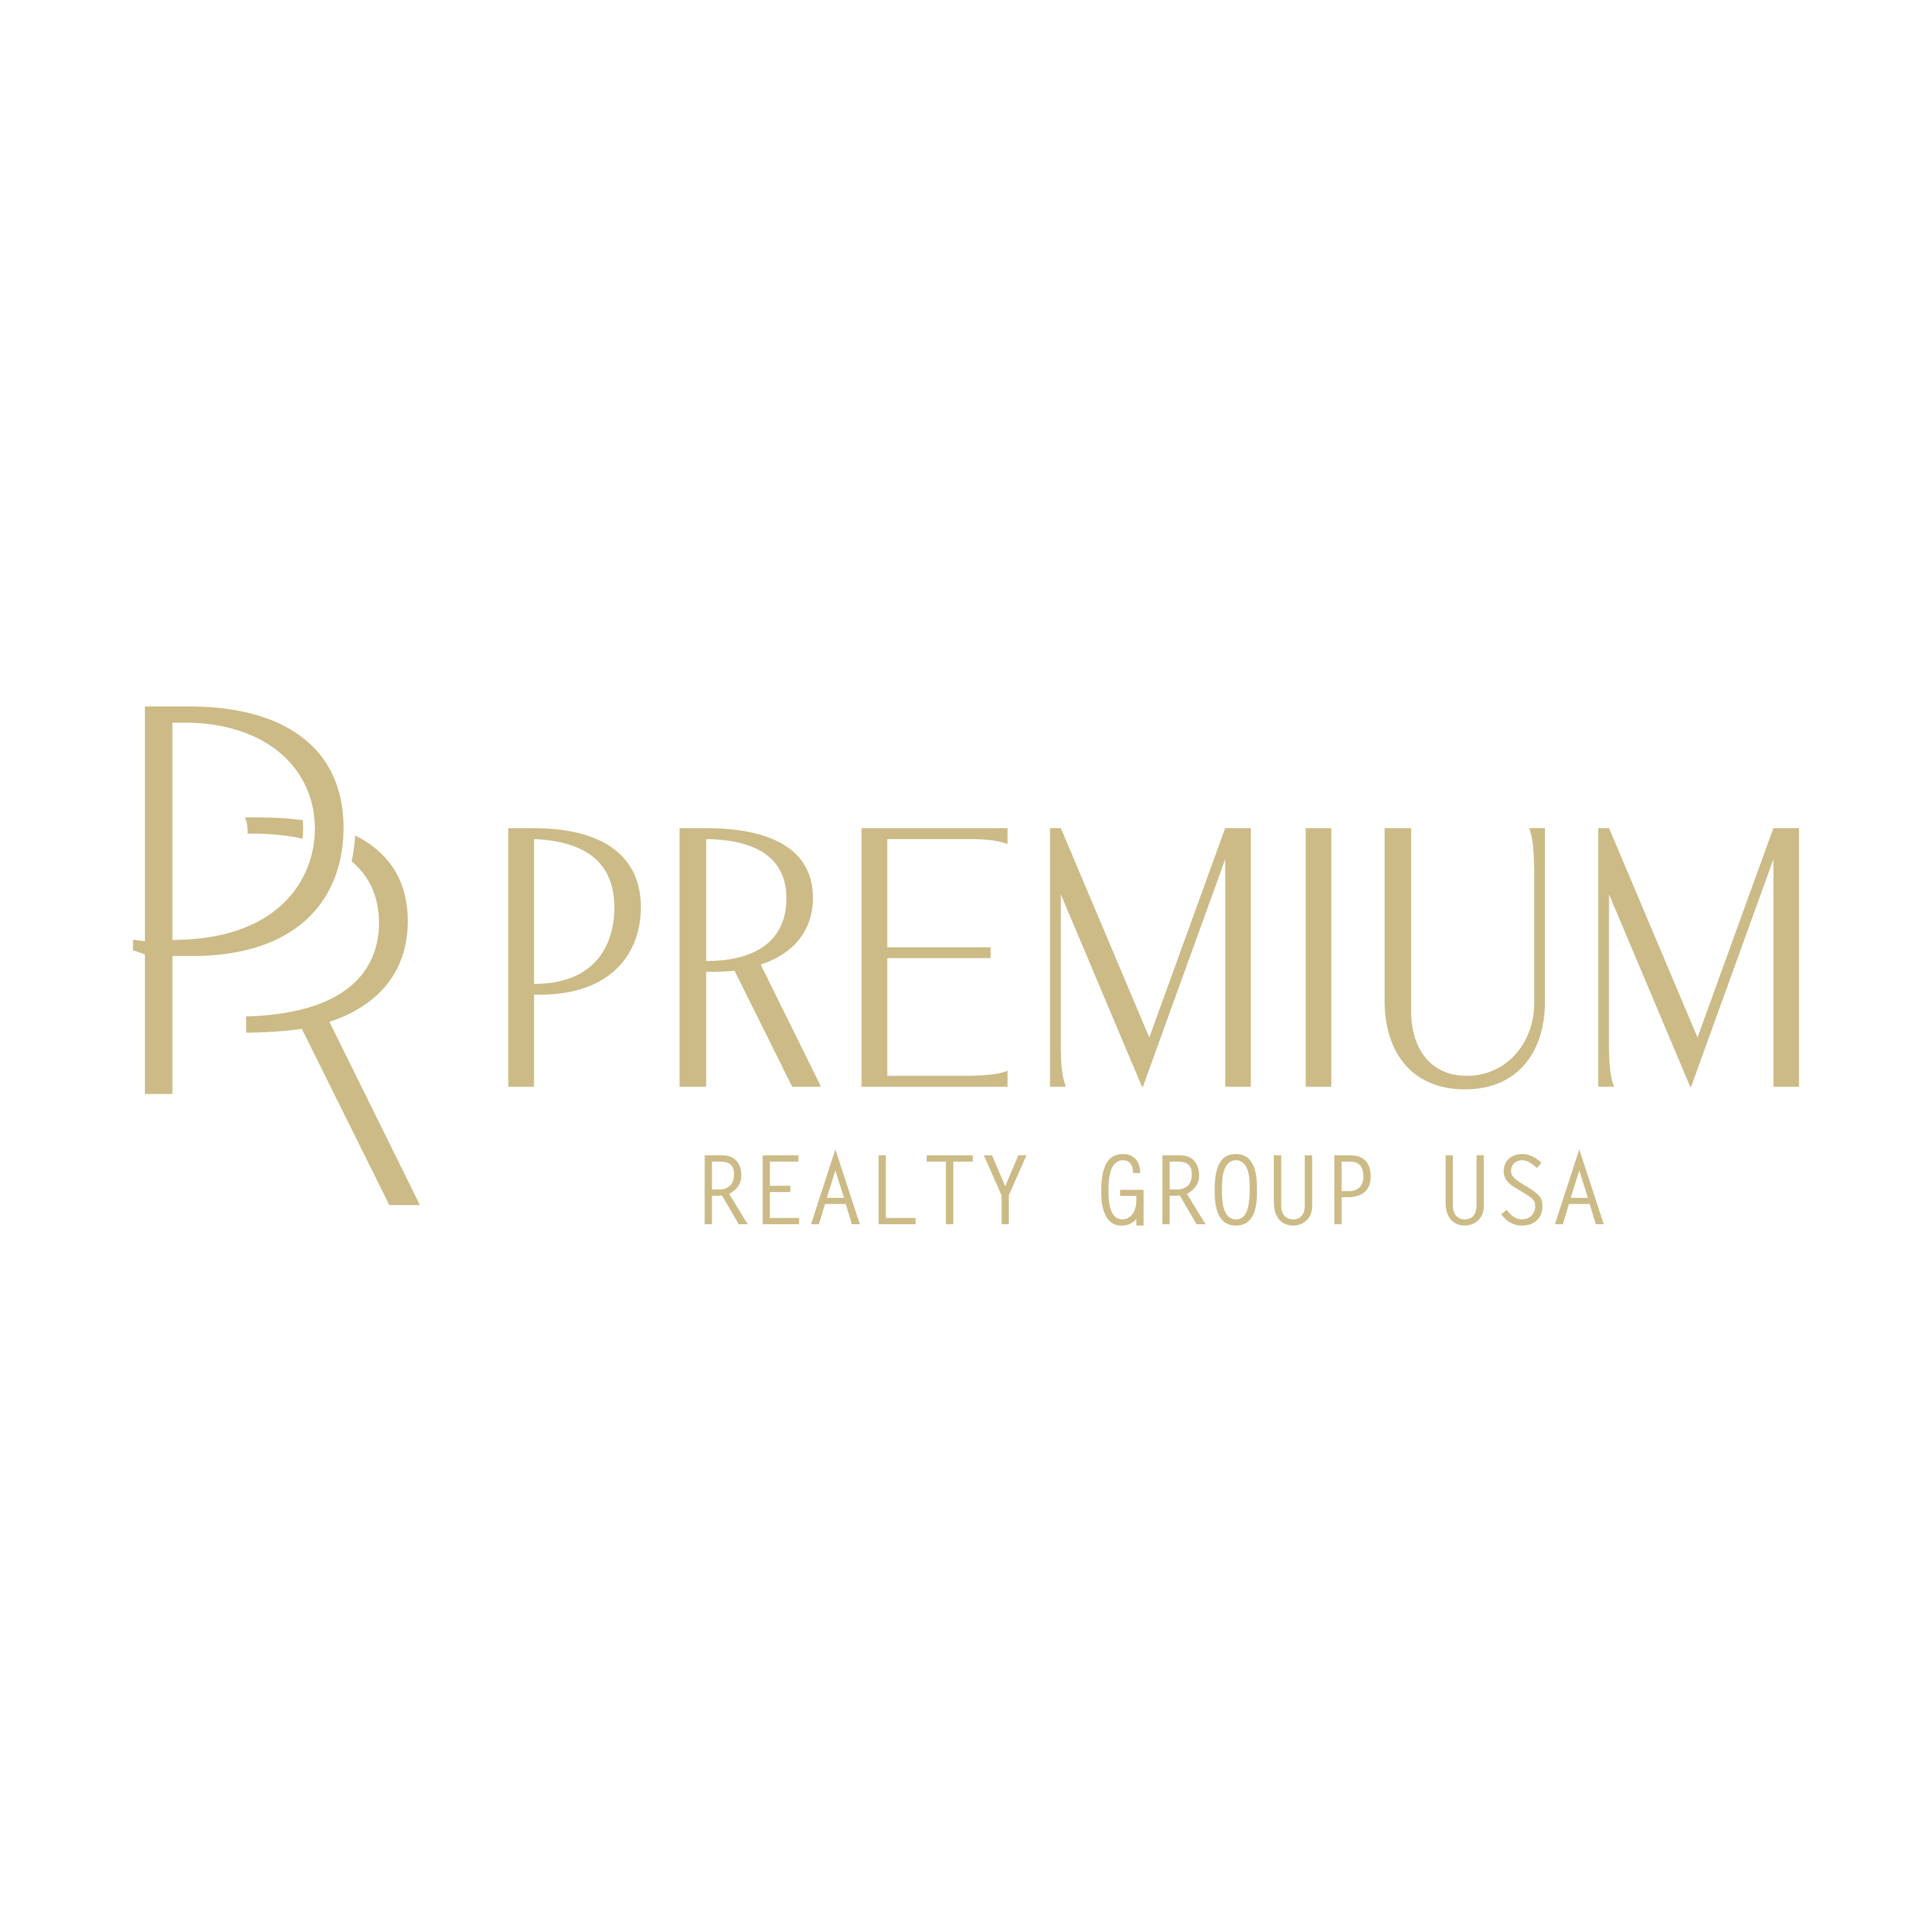 Premium Realty Group USA